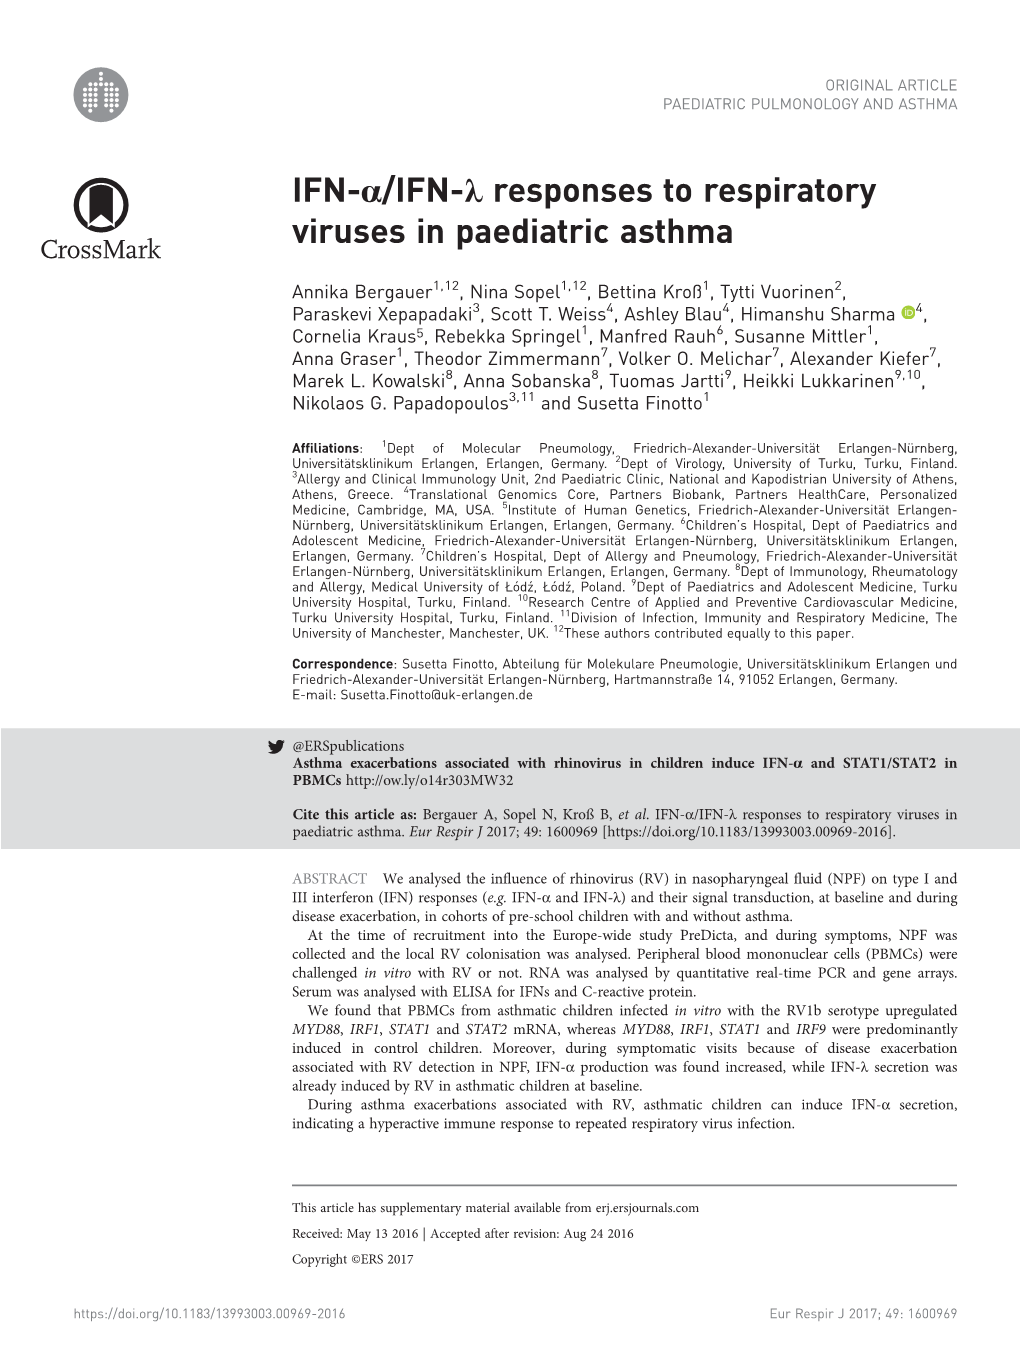 IFN-Α/IFN-Λ Responses to Respiratory Viruses in Paediatric Asthma